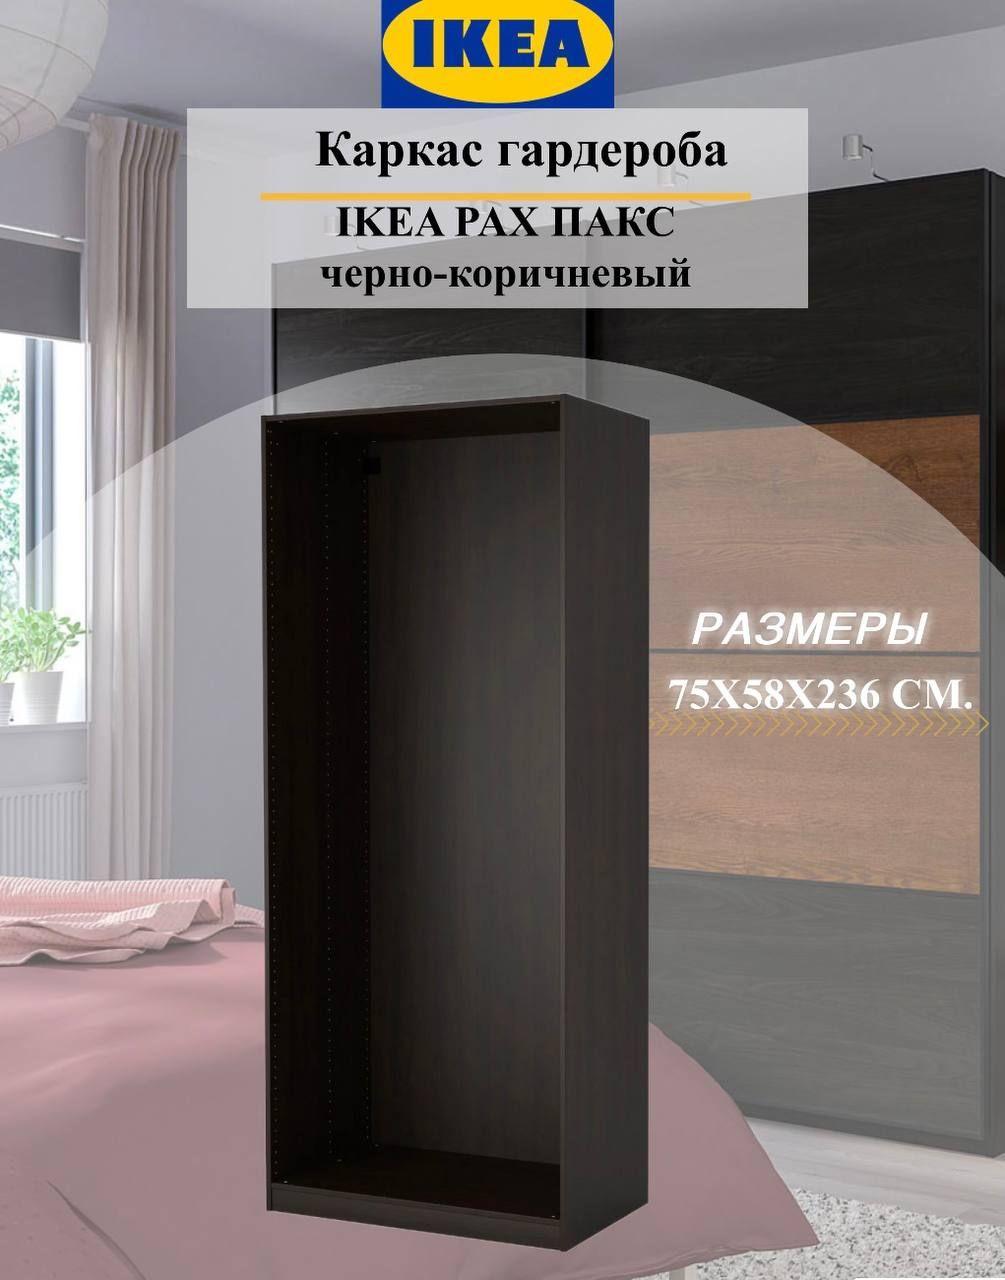 Каркас гардероба IKEA PAX ПАКС, 75x58x236 см, черно-коричневый